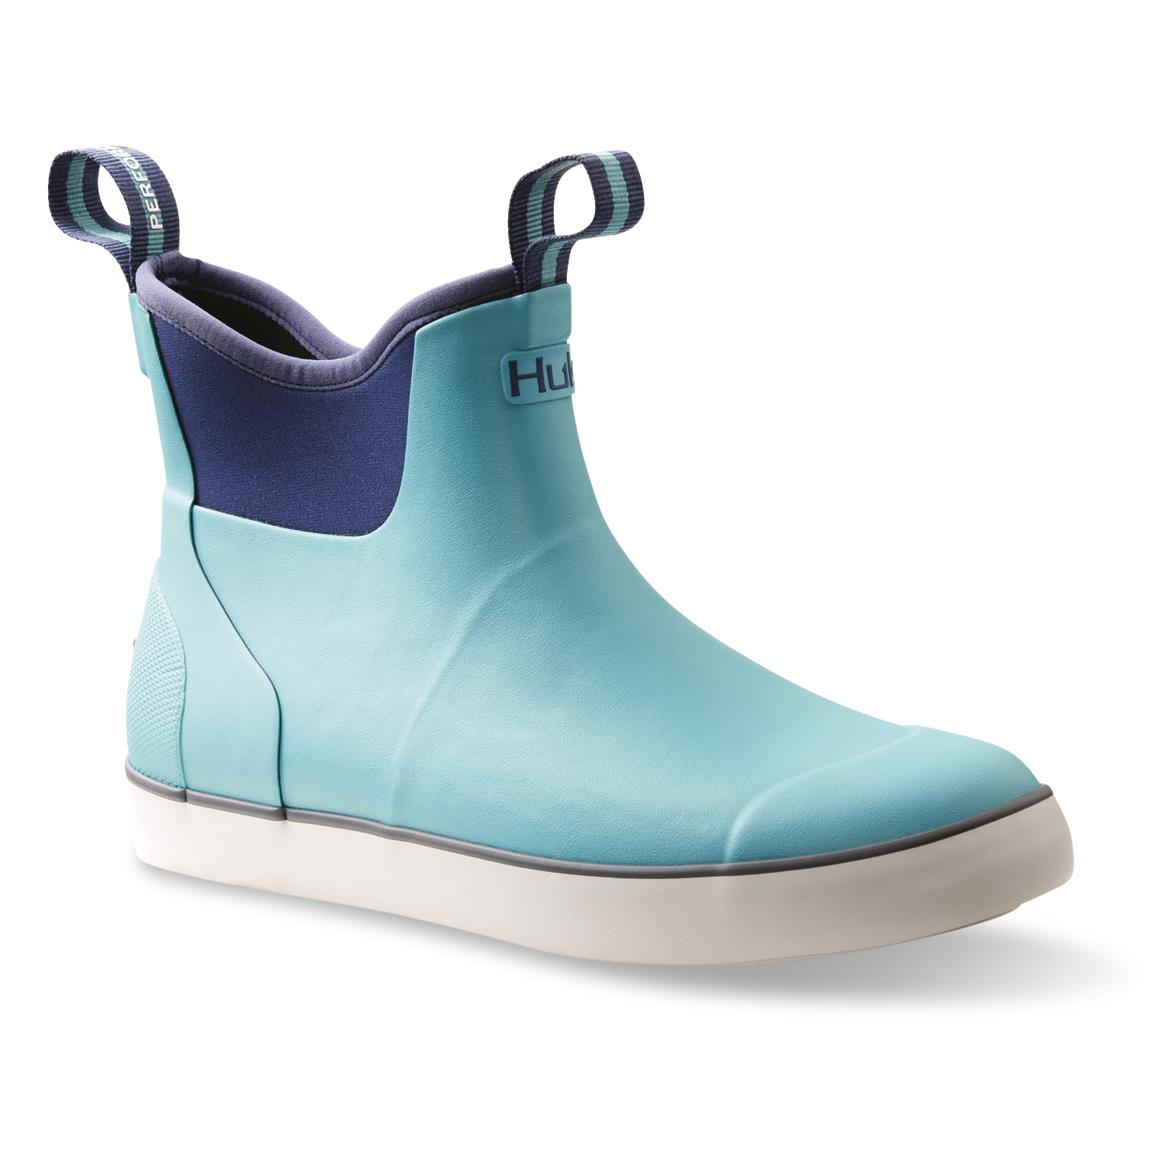 Huk Women's Rogue Wave Waterproof Boots, Porcelain Blue